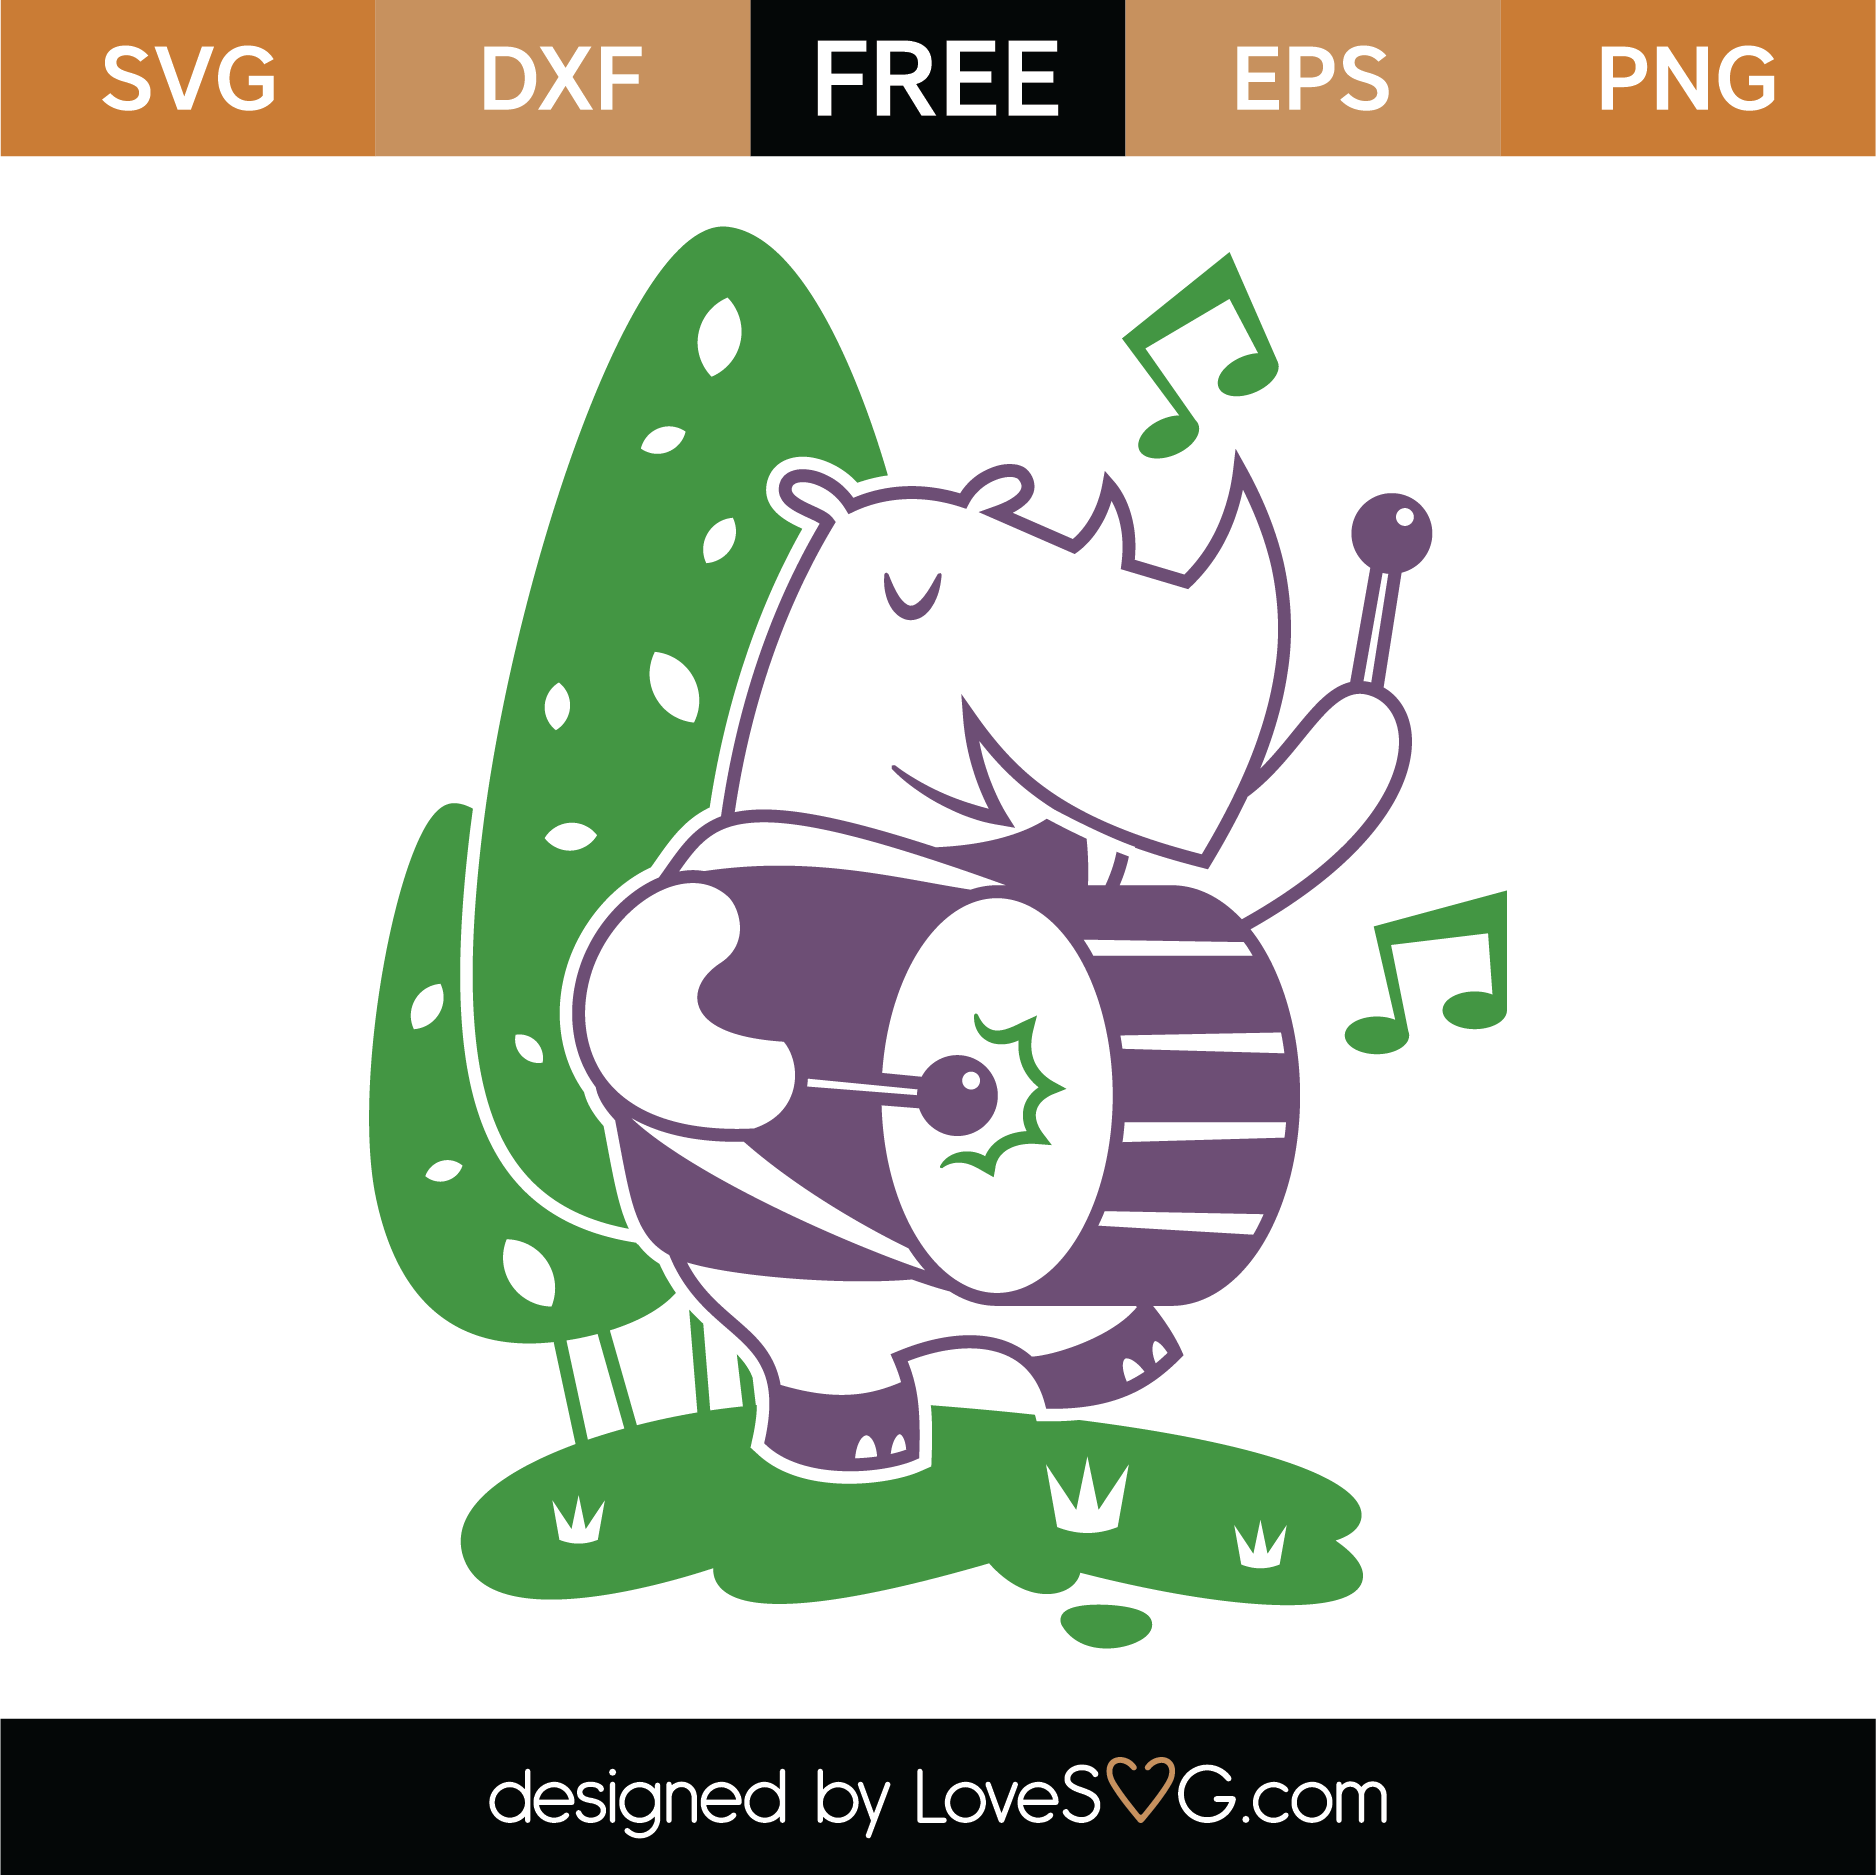 Download Free Whimsical Elephant SVG Cut File | Lovesvg.com